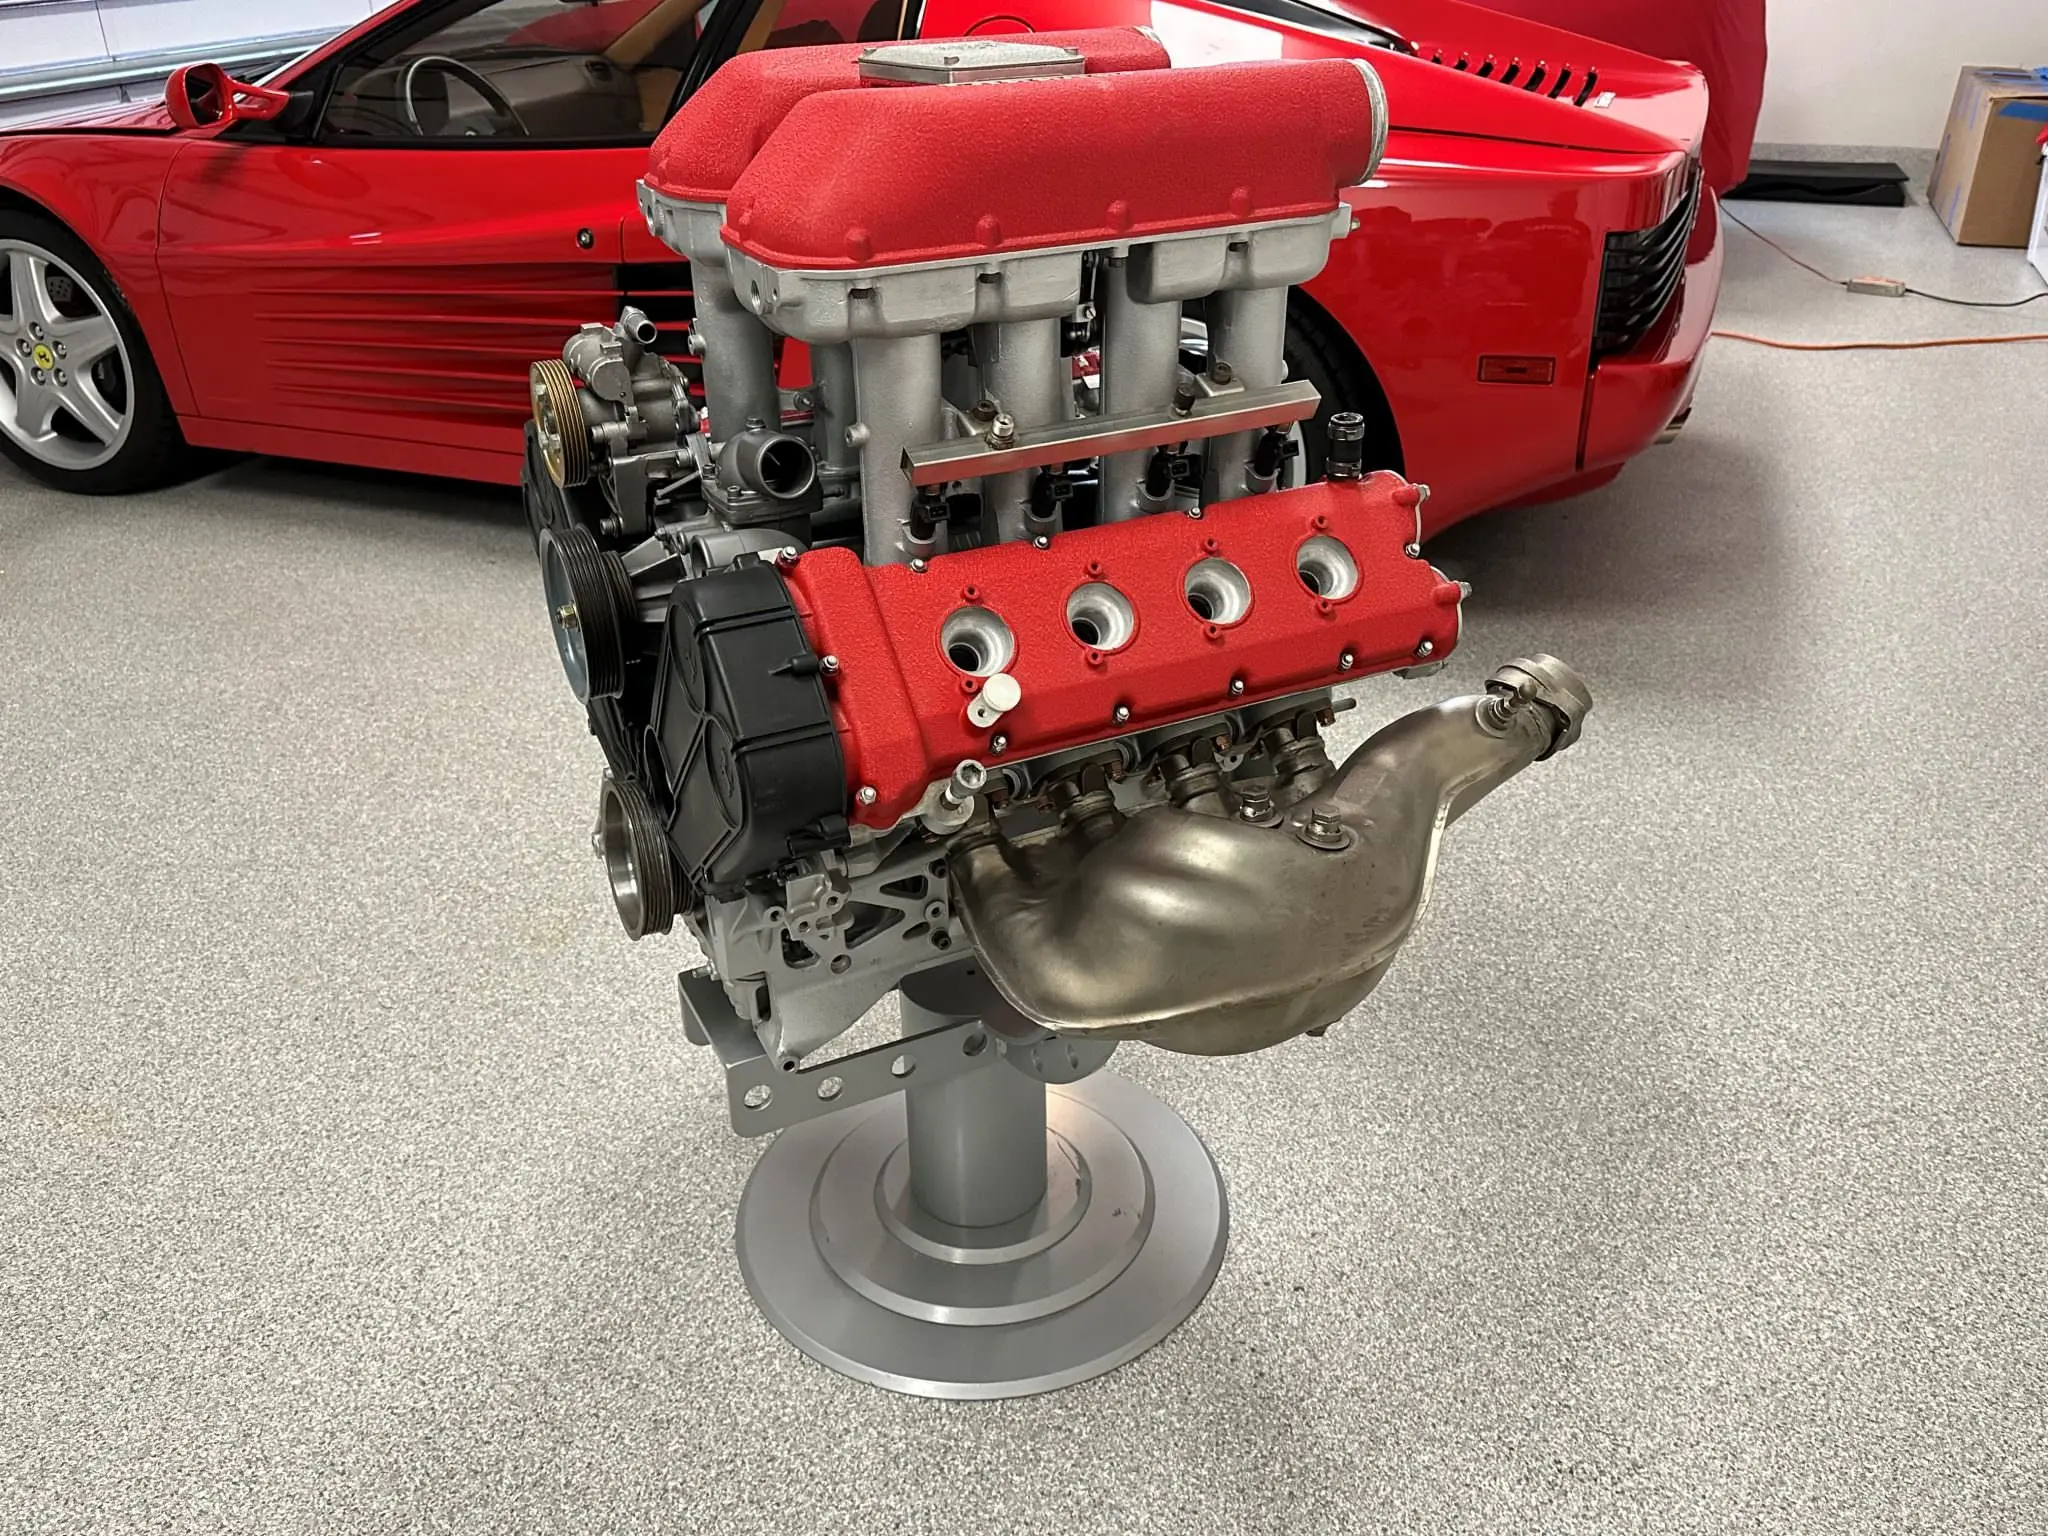 ferrari 360 spider engine - What is the BHP of the Ferrari 360 Spider